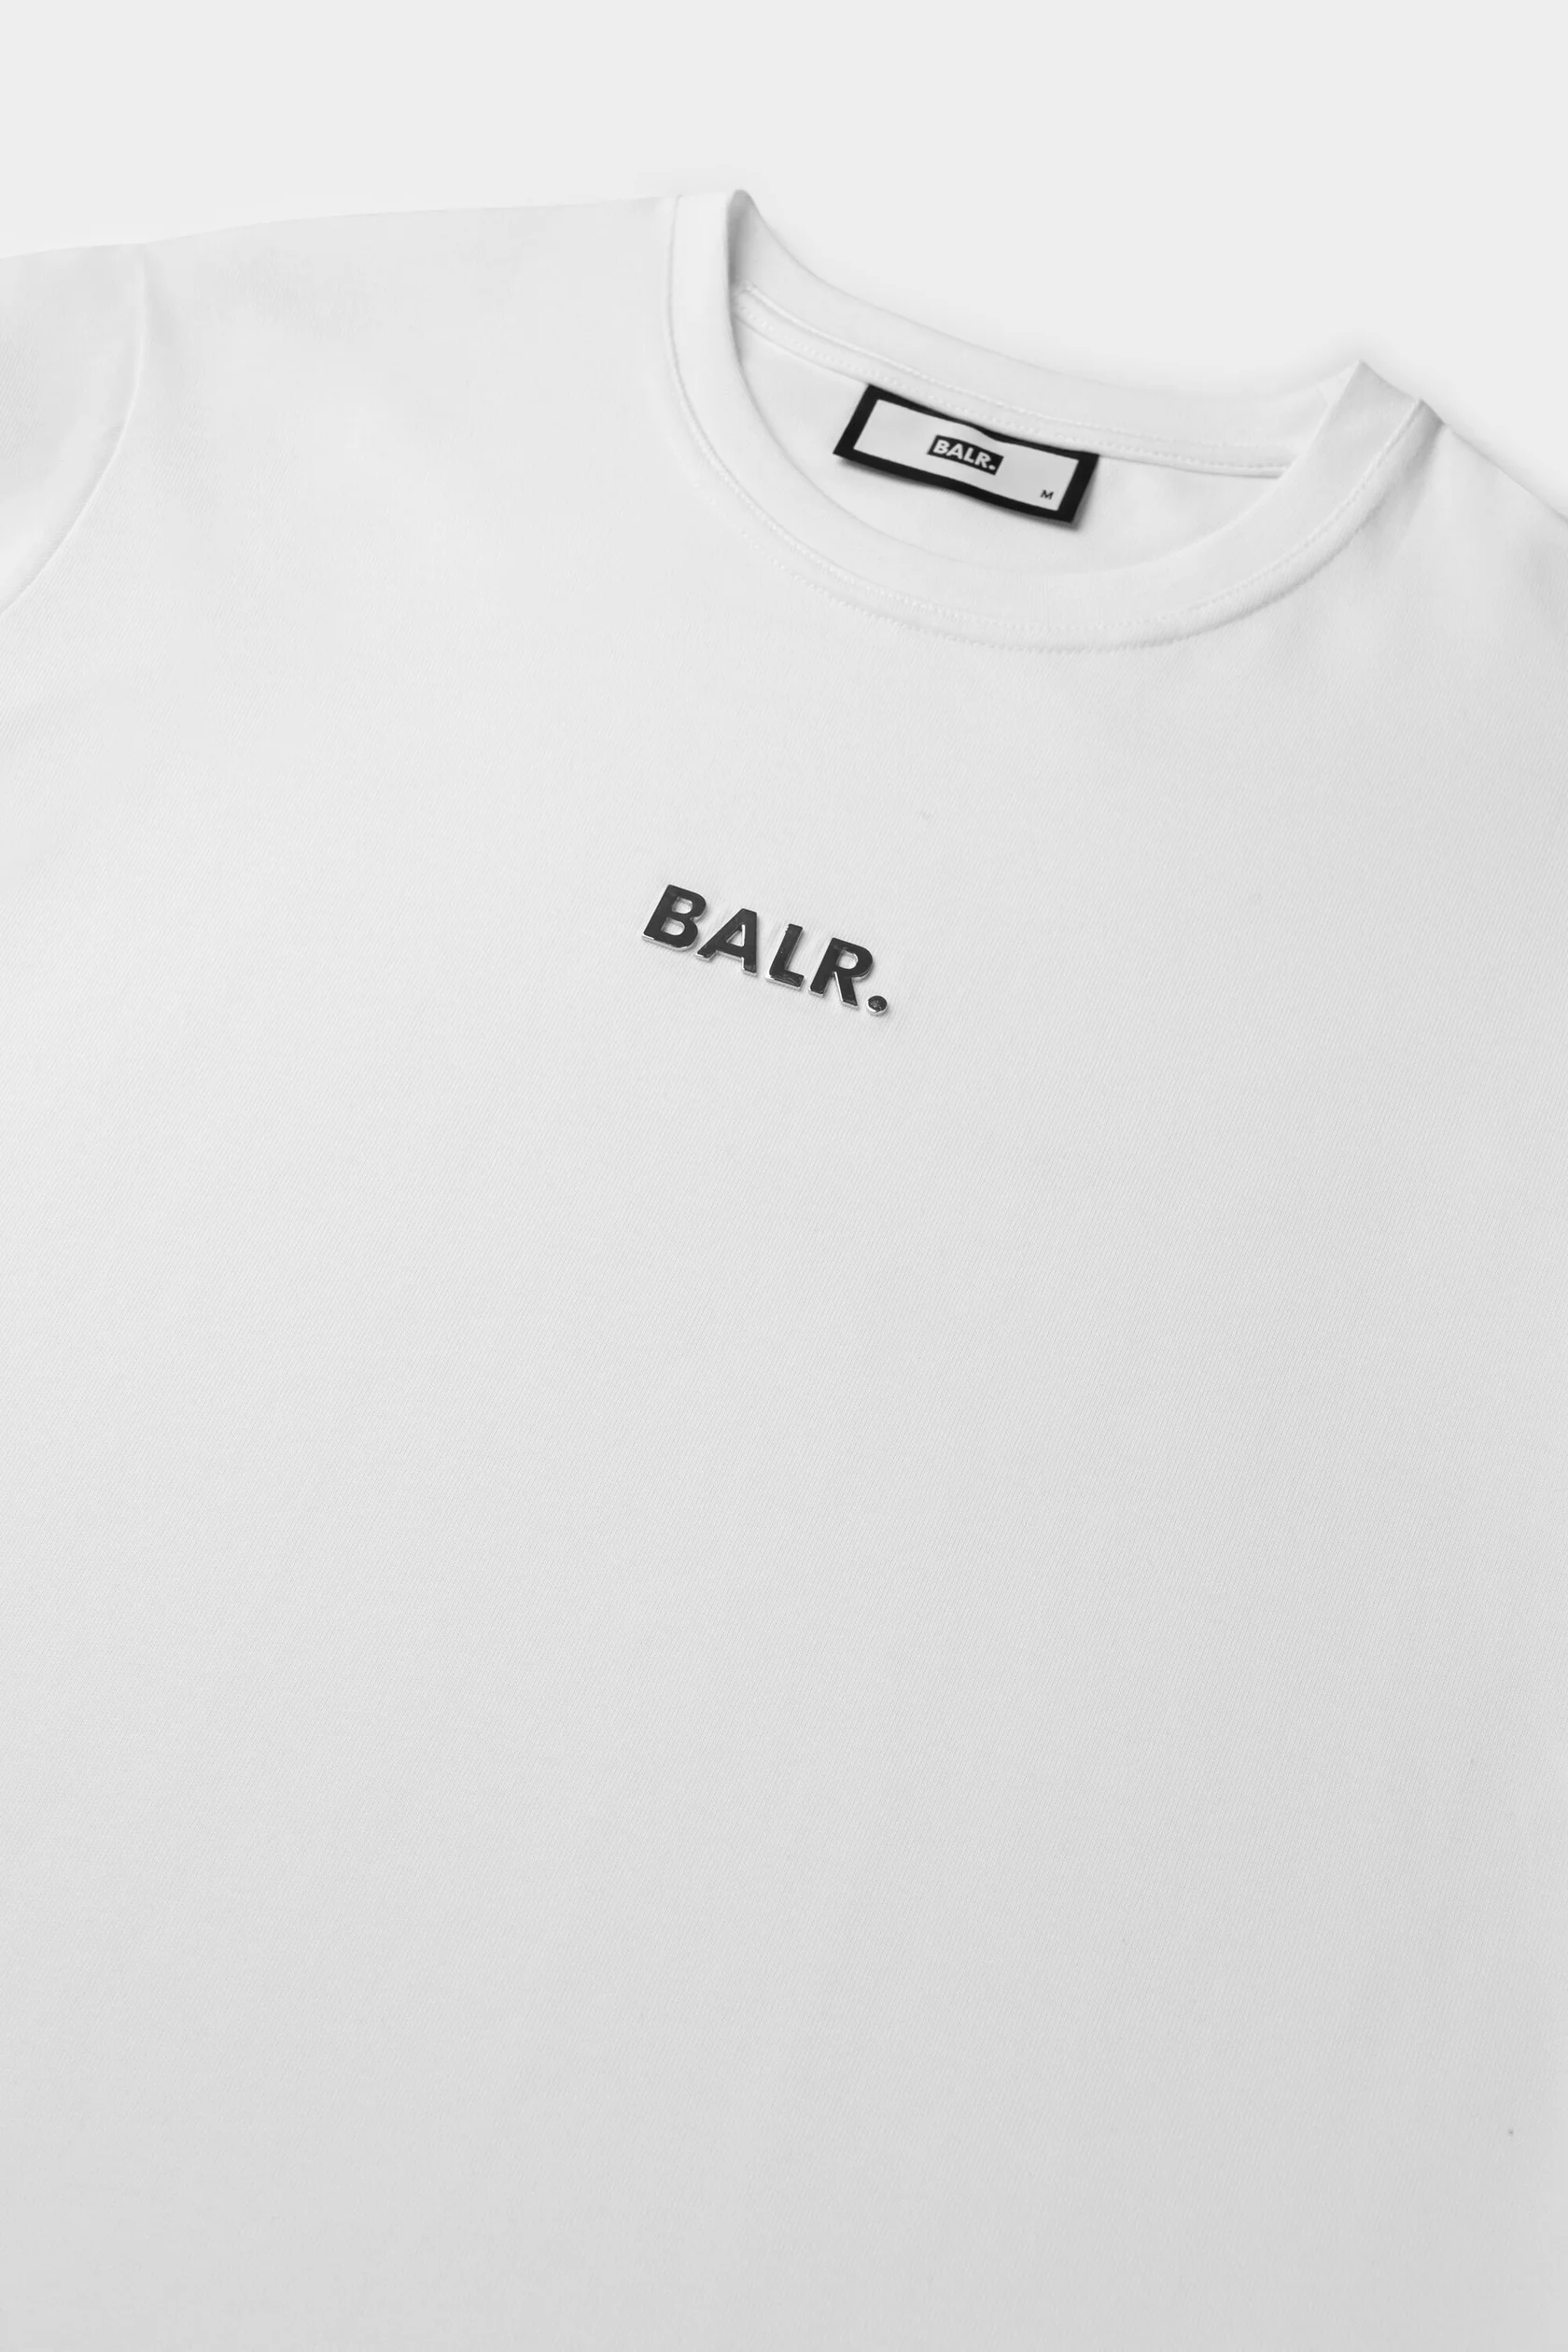 BALR.（ボーラー）BL Classic Straight T-Shirt Men(XS WHITE)｜ B'2nd